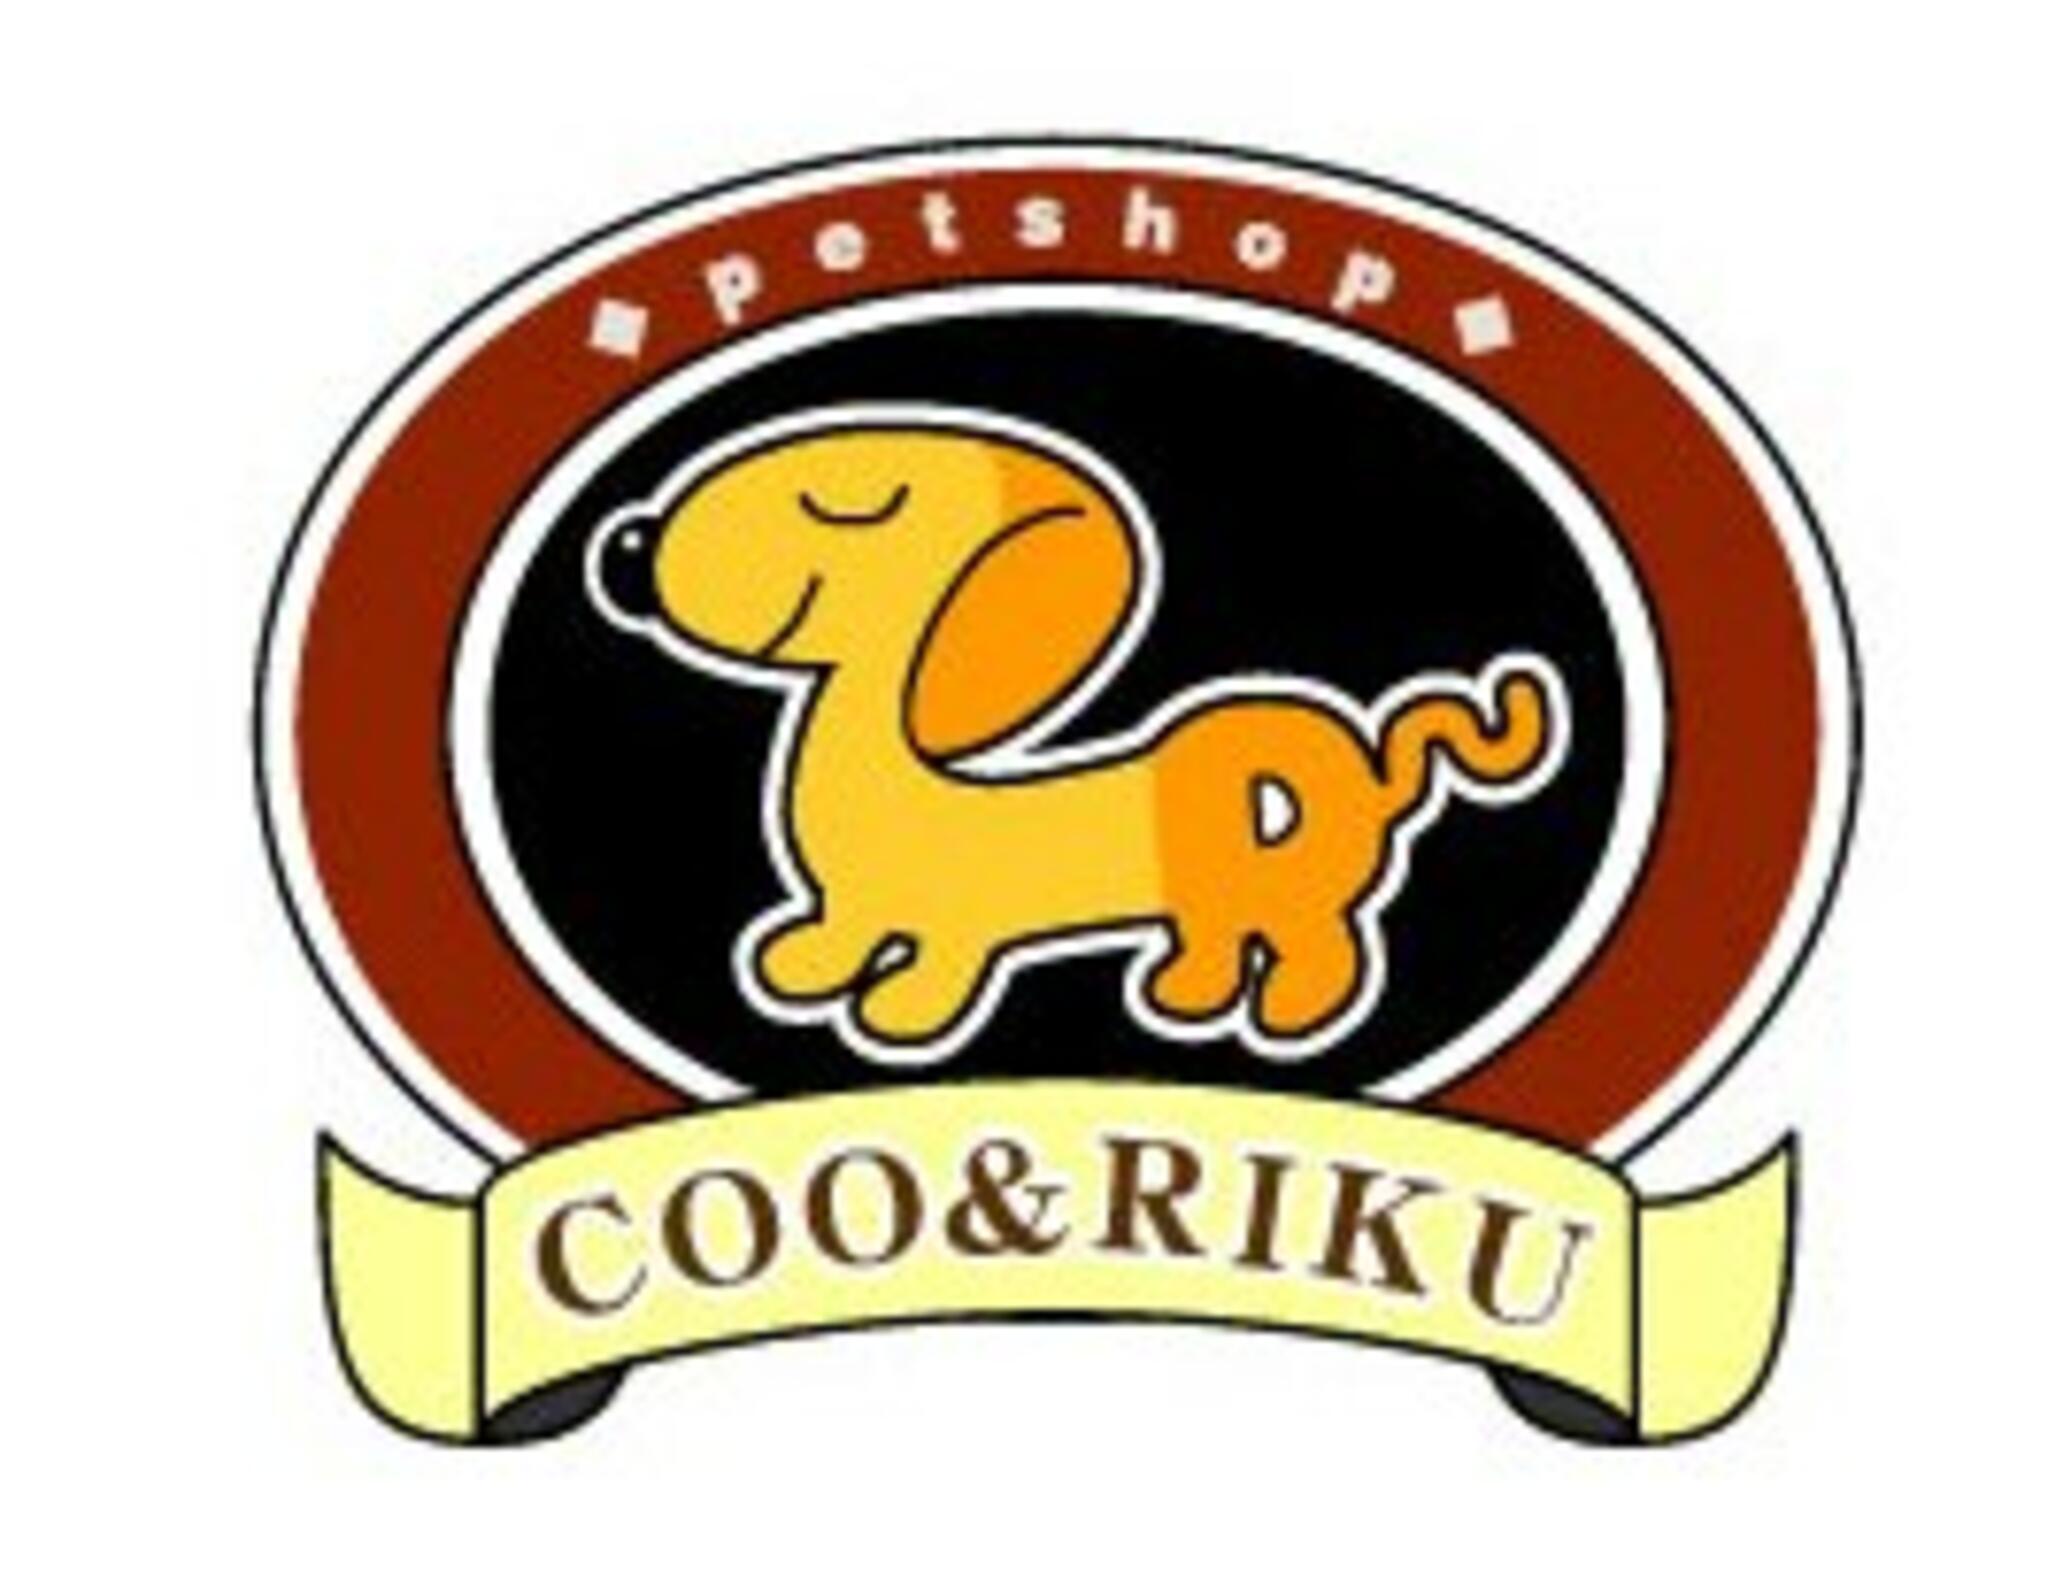 COO&RIKU 大分店の代表写真5